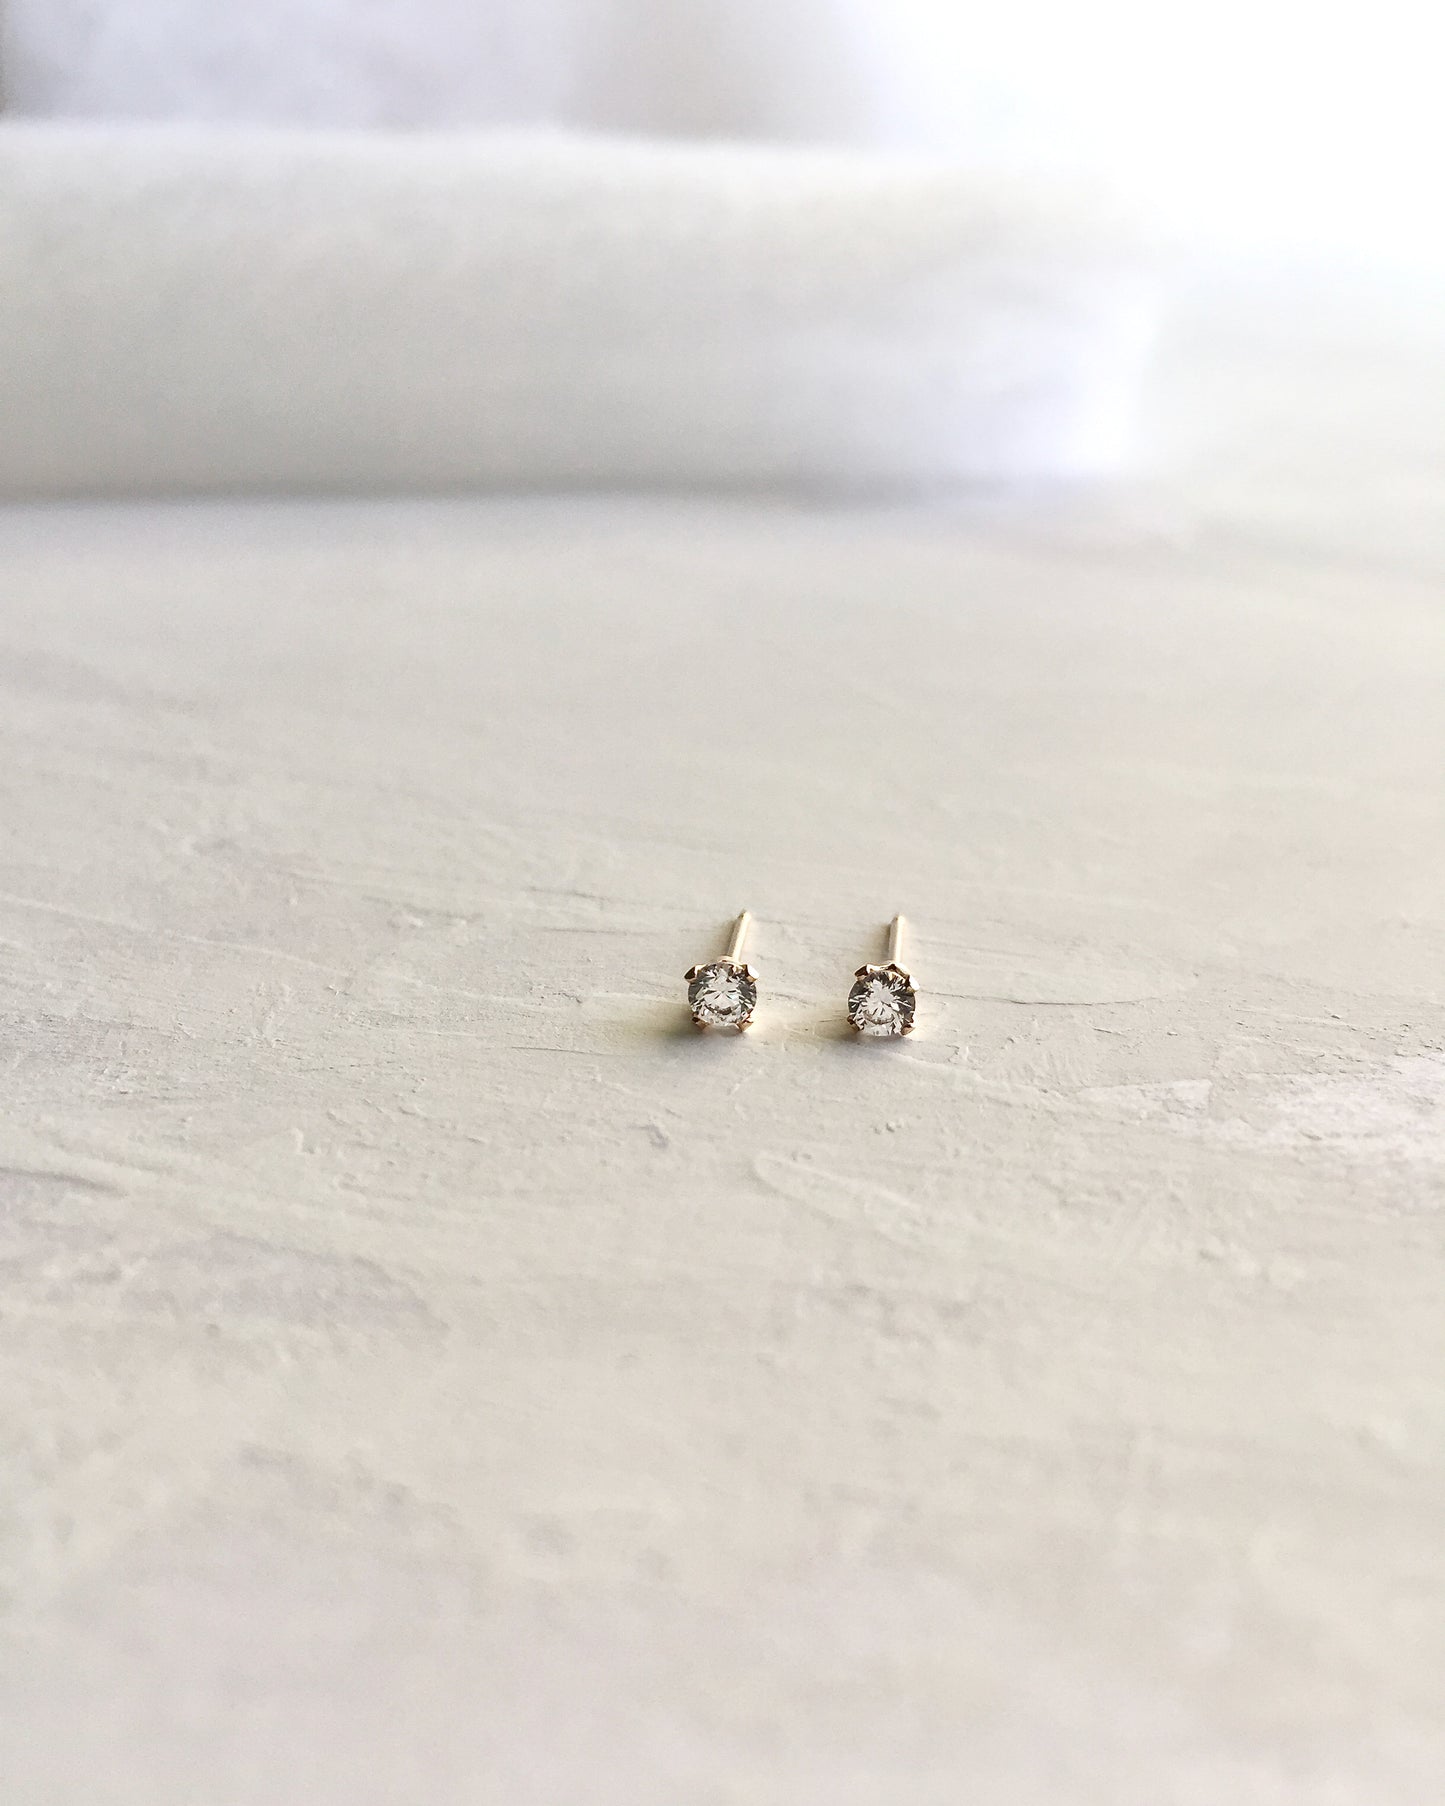 Tiny CZ Stud Earrings | Simple Everyday Stud Earrings | IB Jewelry